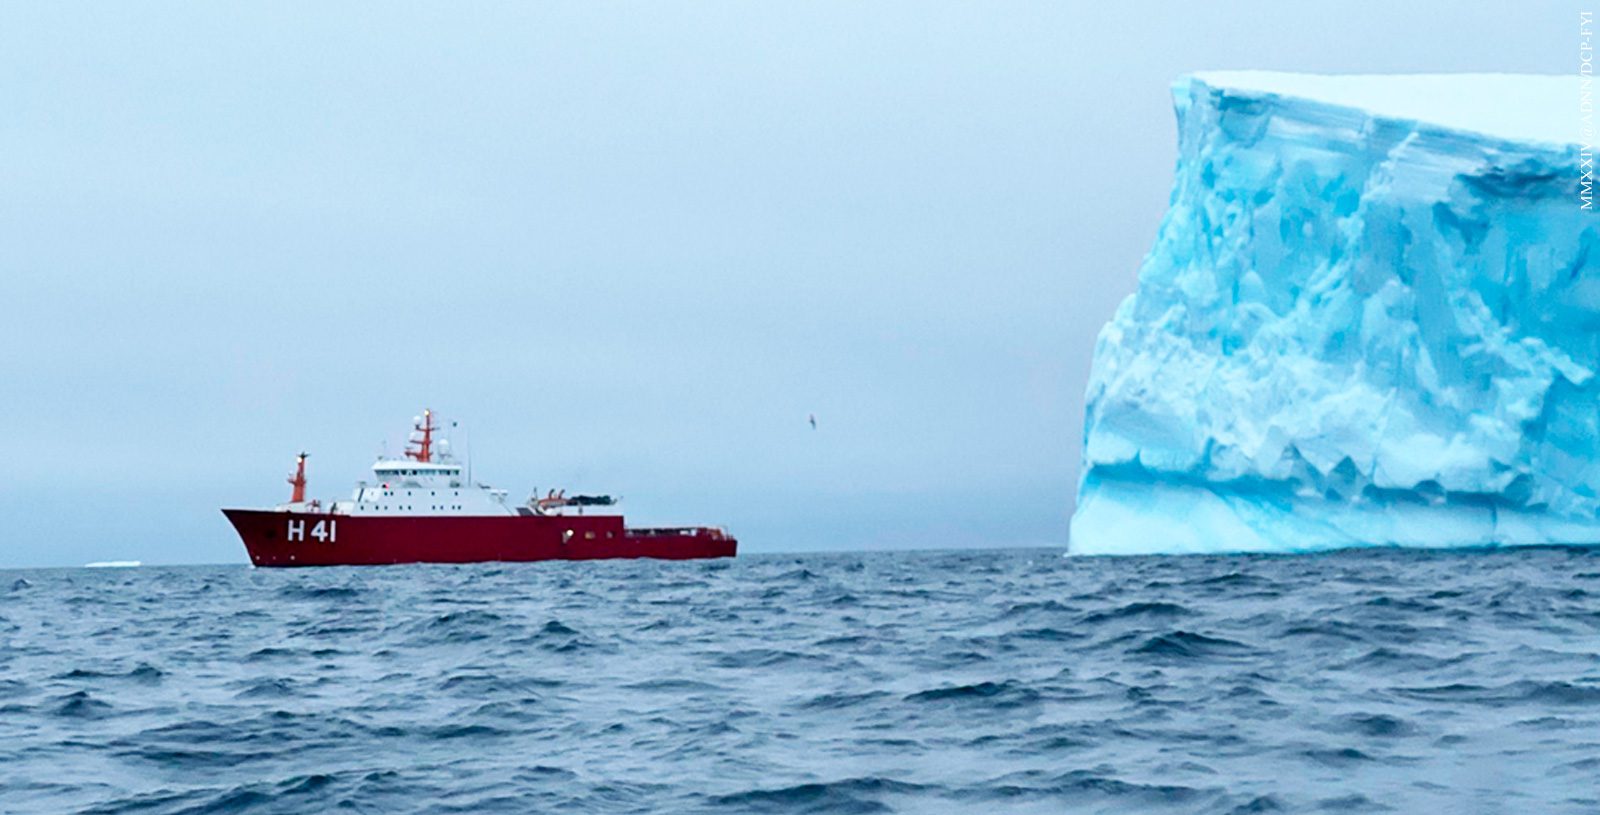 Polar ship "Almirante Maximiano" crosses the Antarctic Circle for the first time